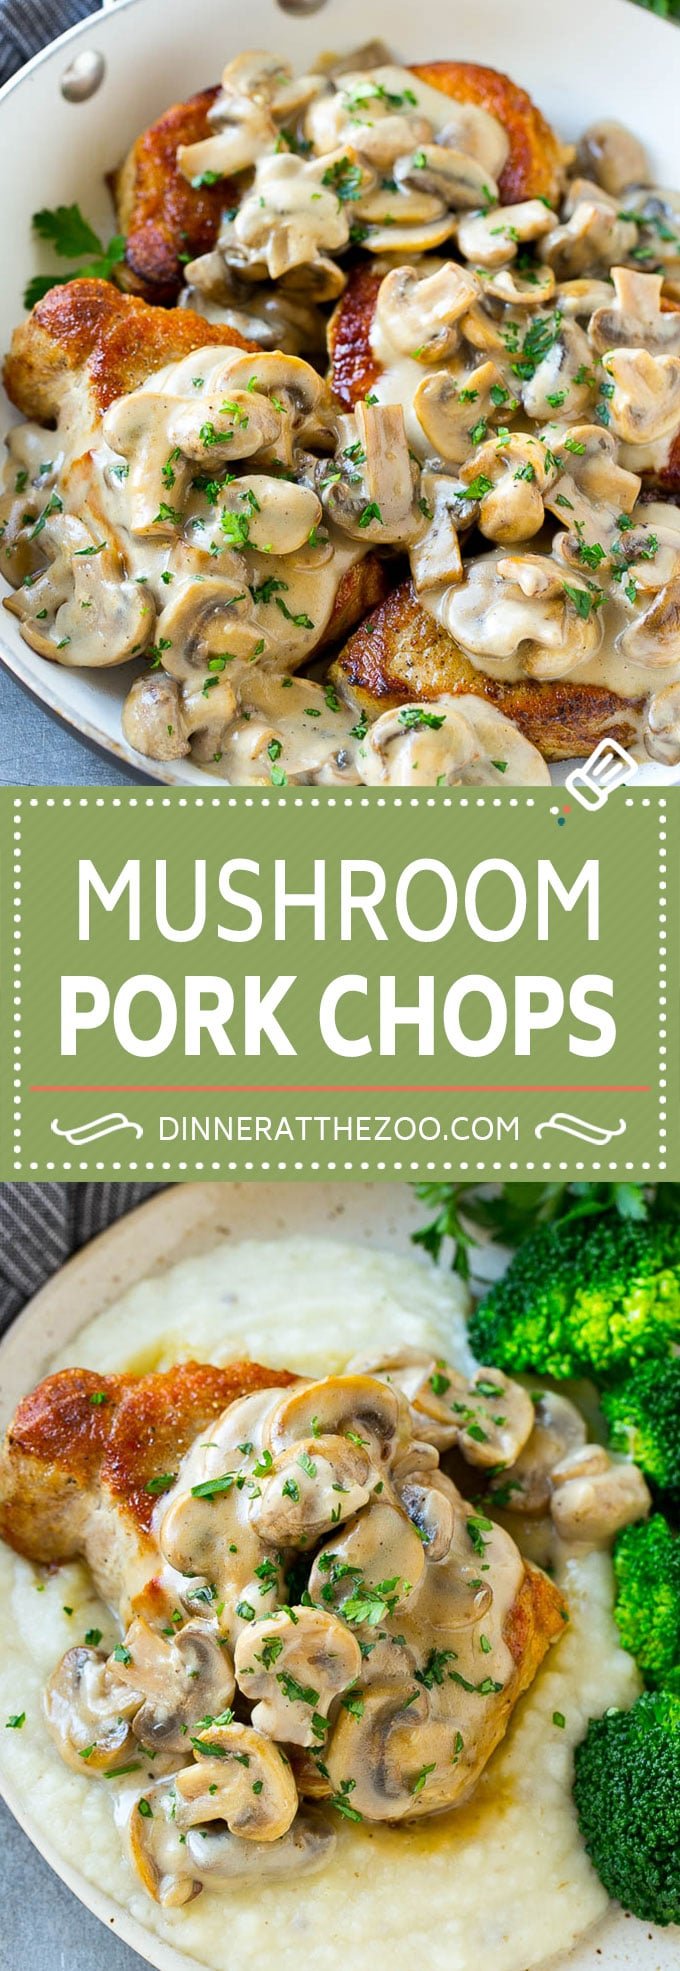 Mushroom Pork Chops Recipe | Boneless Pork Chop Recipe | Pork Chops with Mushroom Sauce #pork #porkchops #mushrooms #dinner #dinneratthezoo